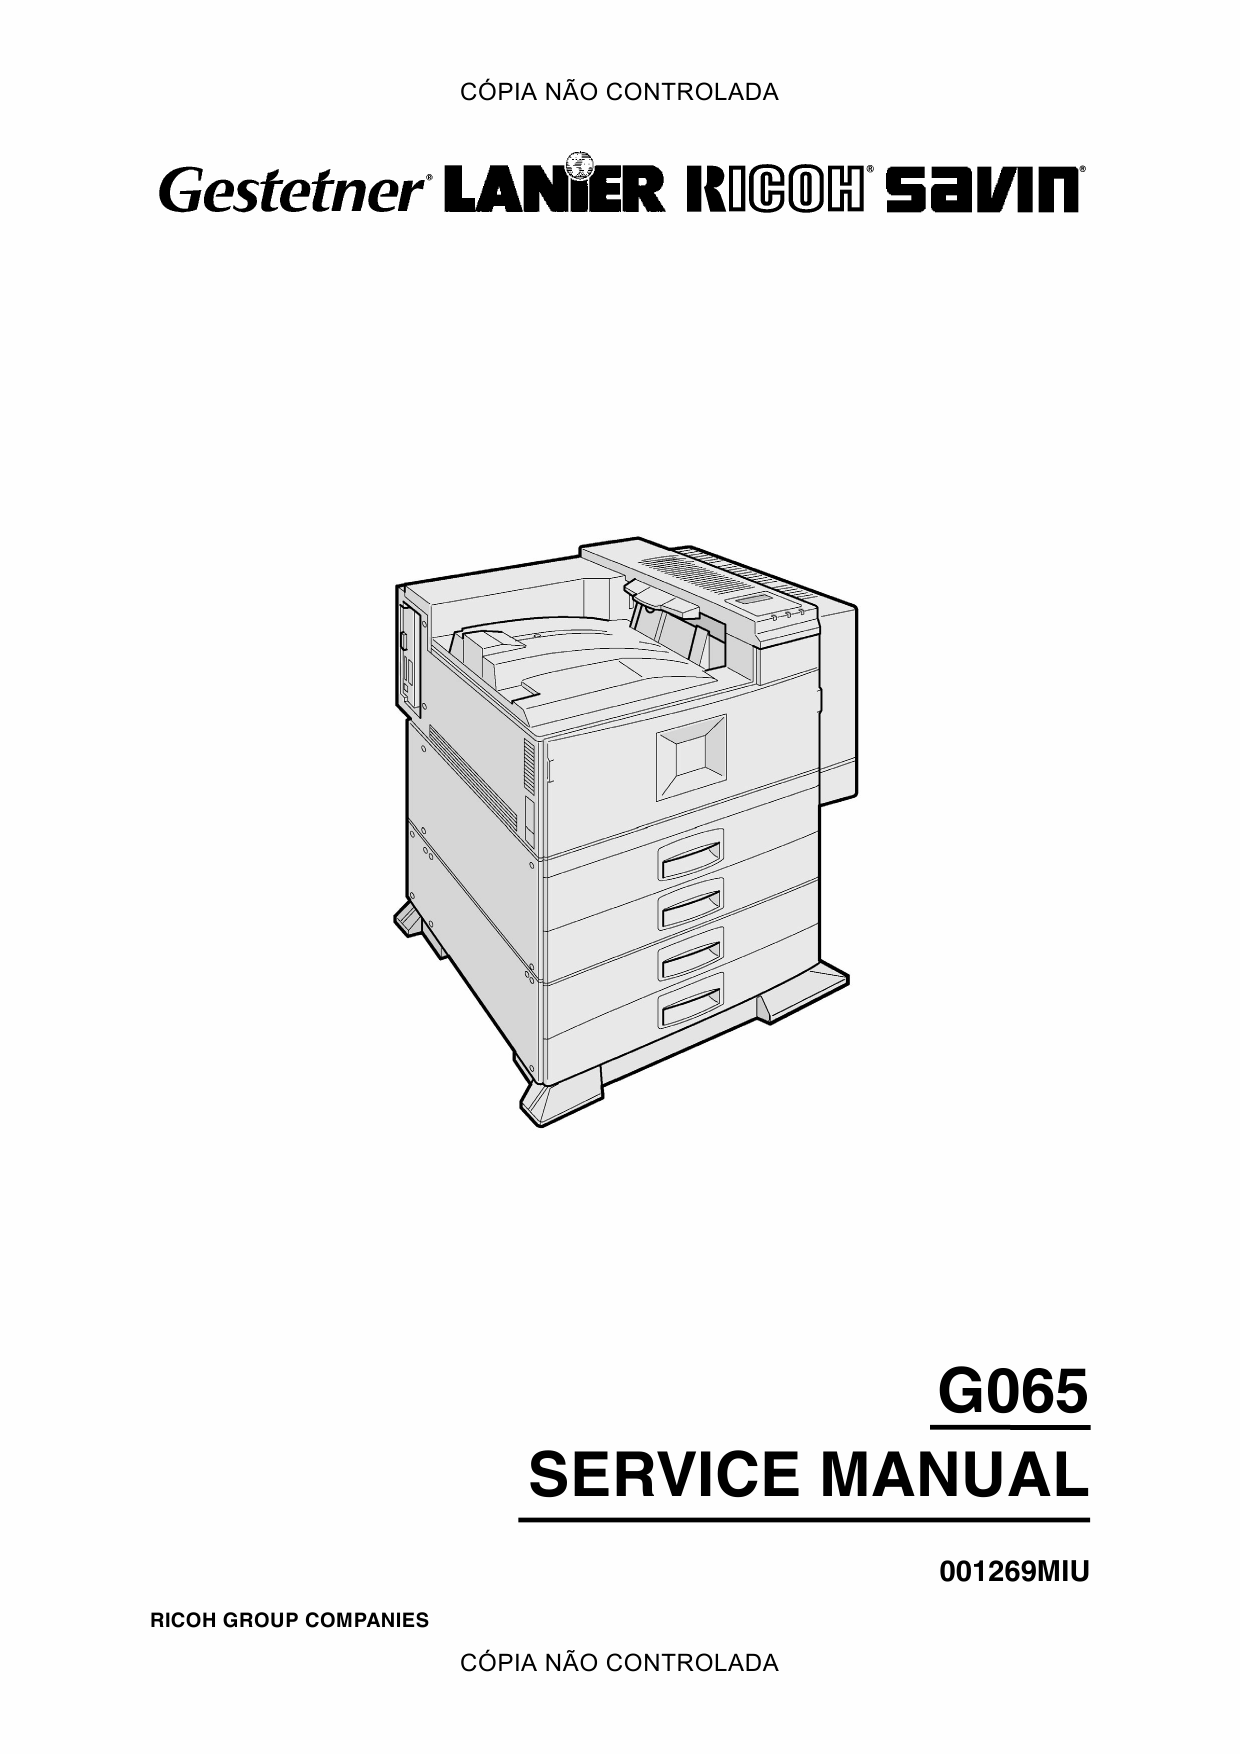 RICOH Aficio AP-4510 G065 Service Manual-1